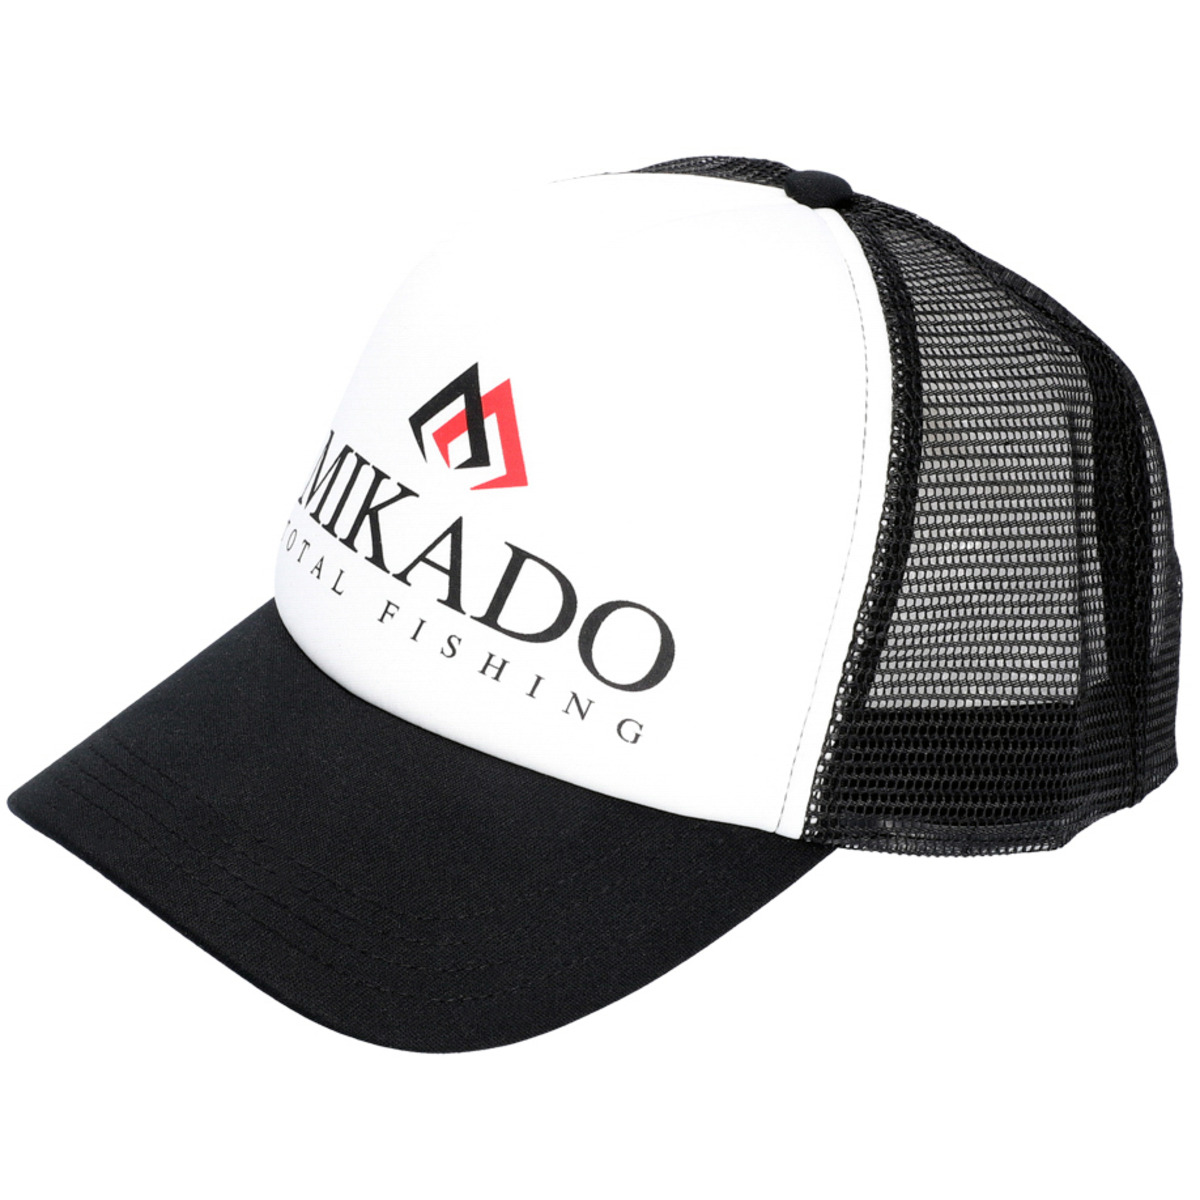 Mikado Baseball Cap - UD002  BLACK AND WHITE